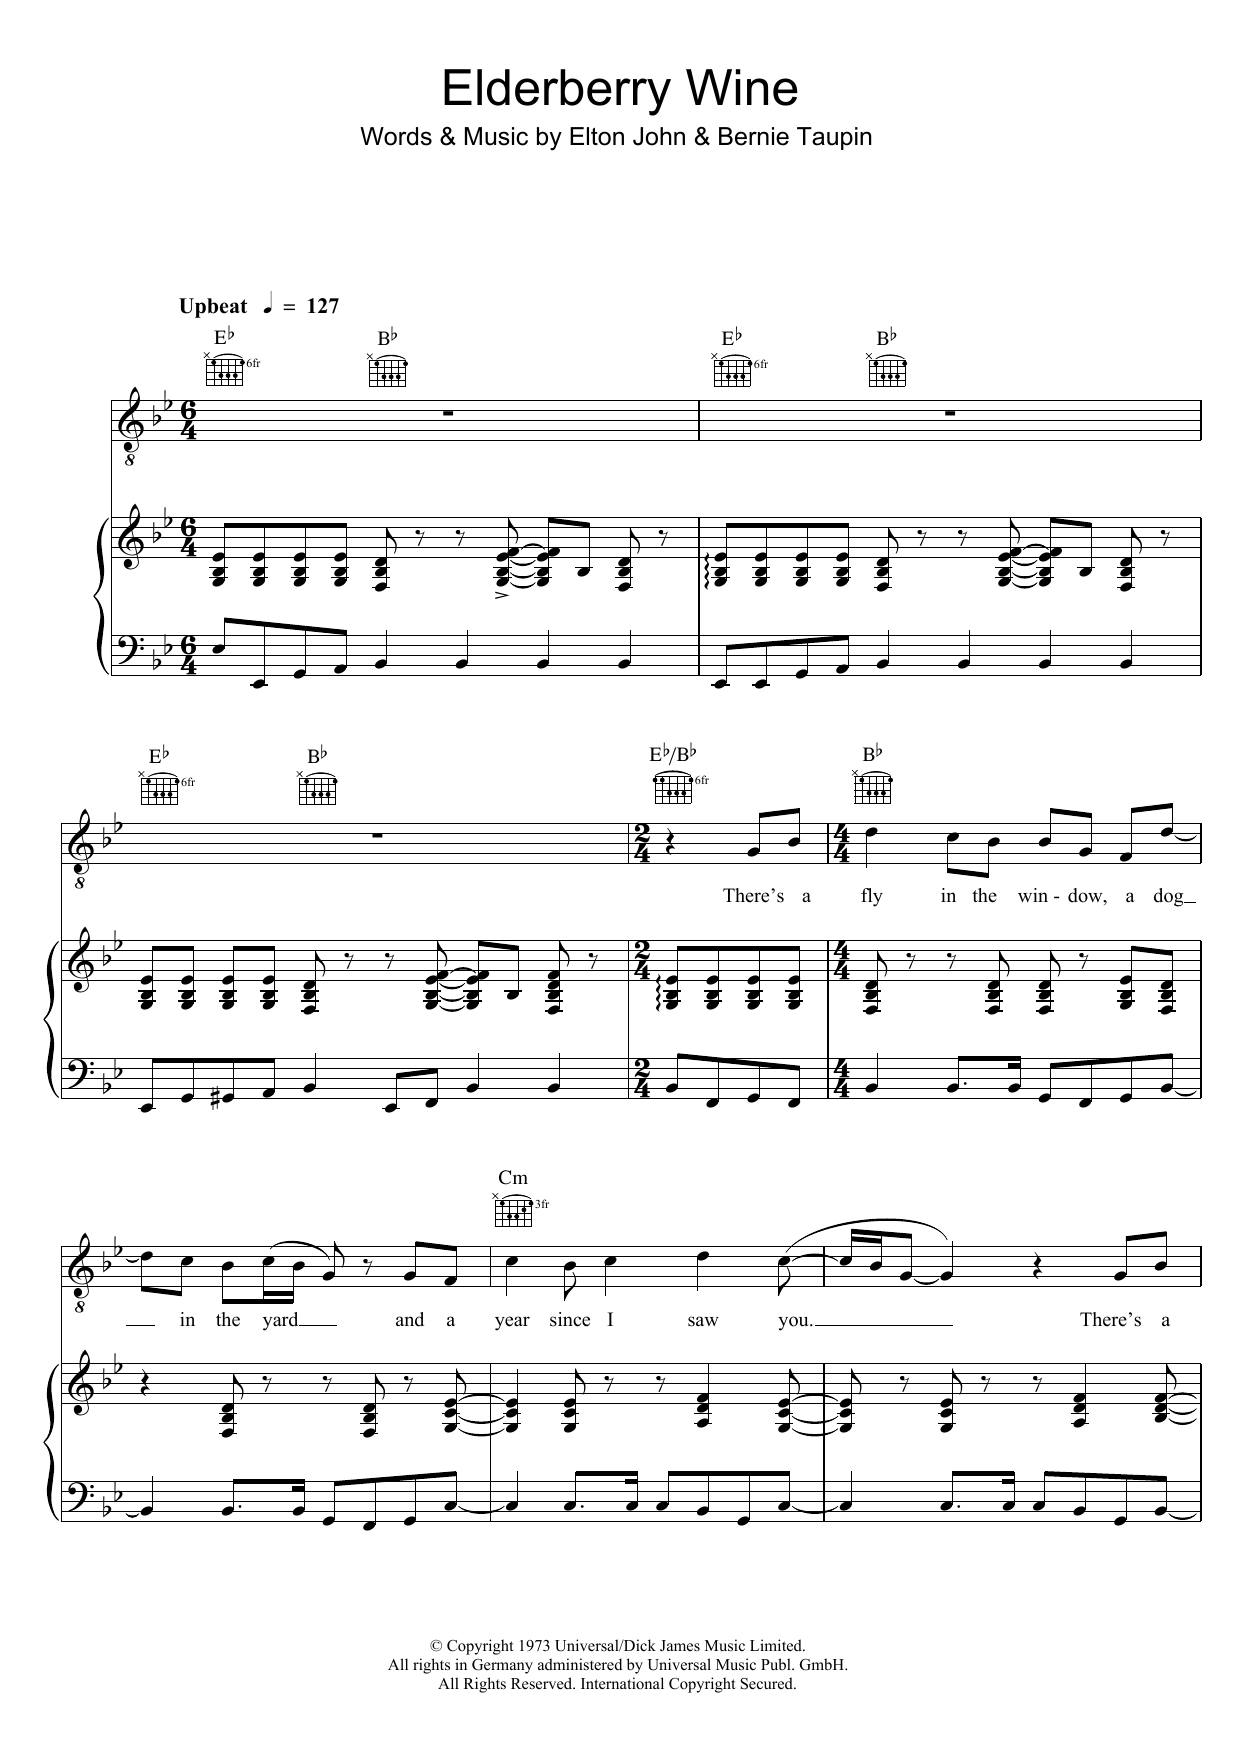 Elton John Elderberry Wine Sheet Music Notes & Chords for Piano, Vocal & Guitar - Download or Print PDF